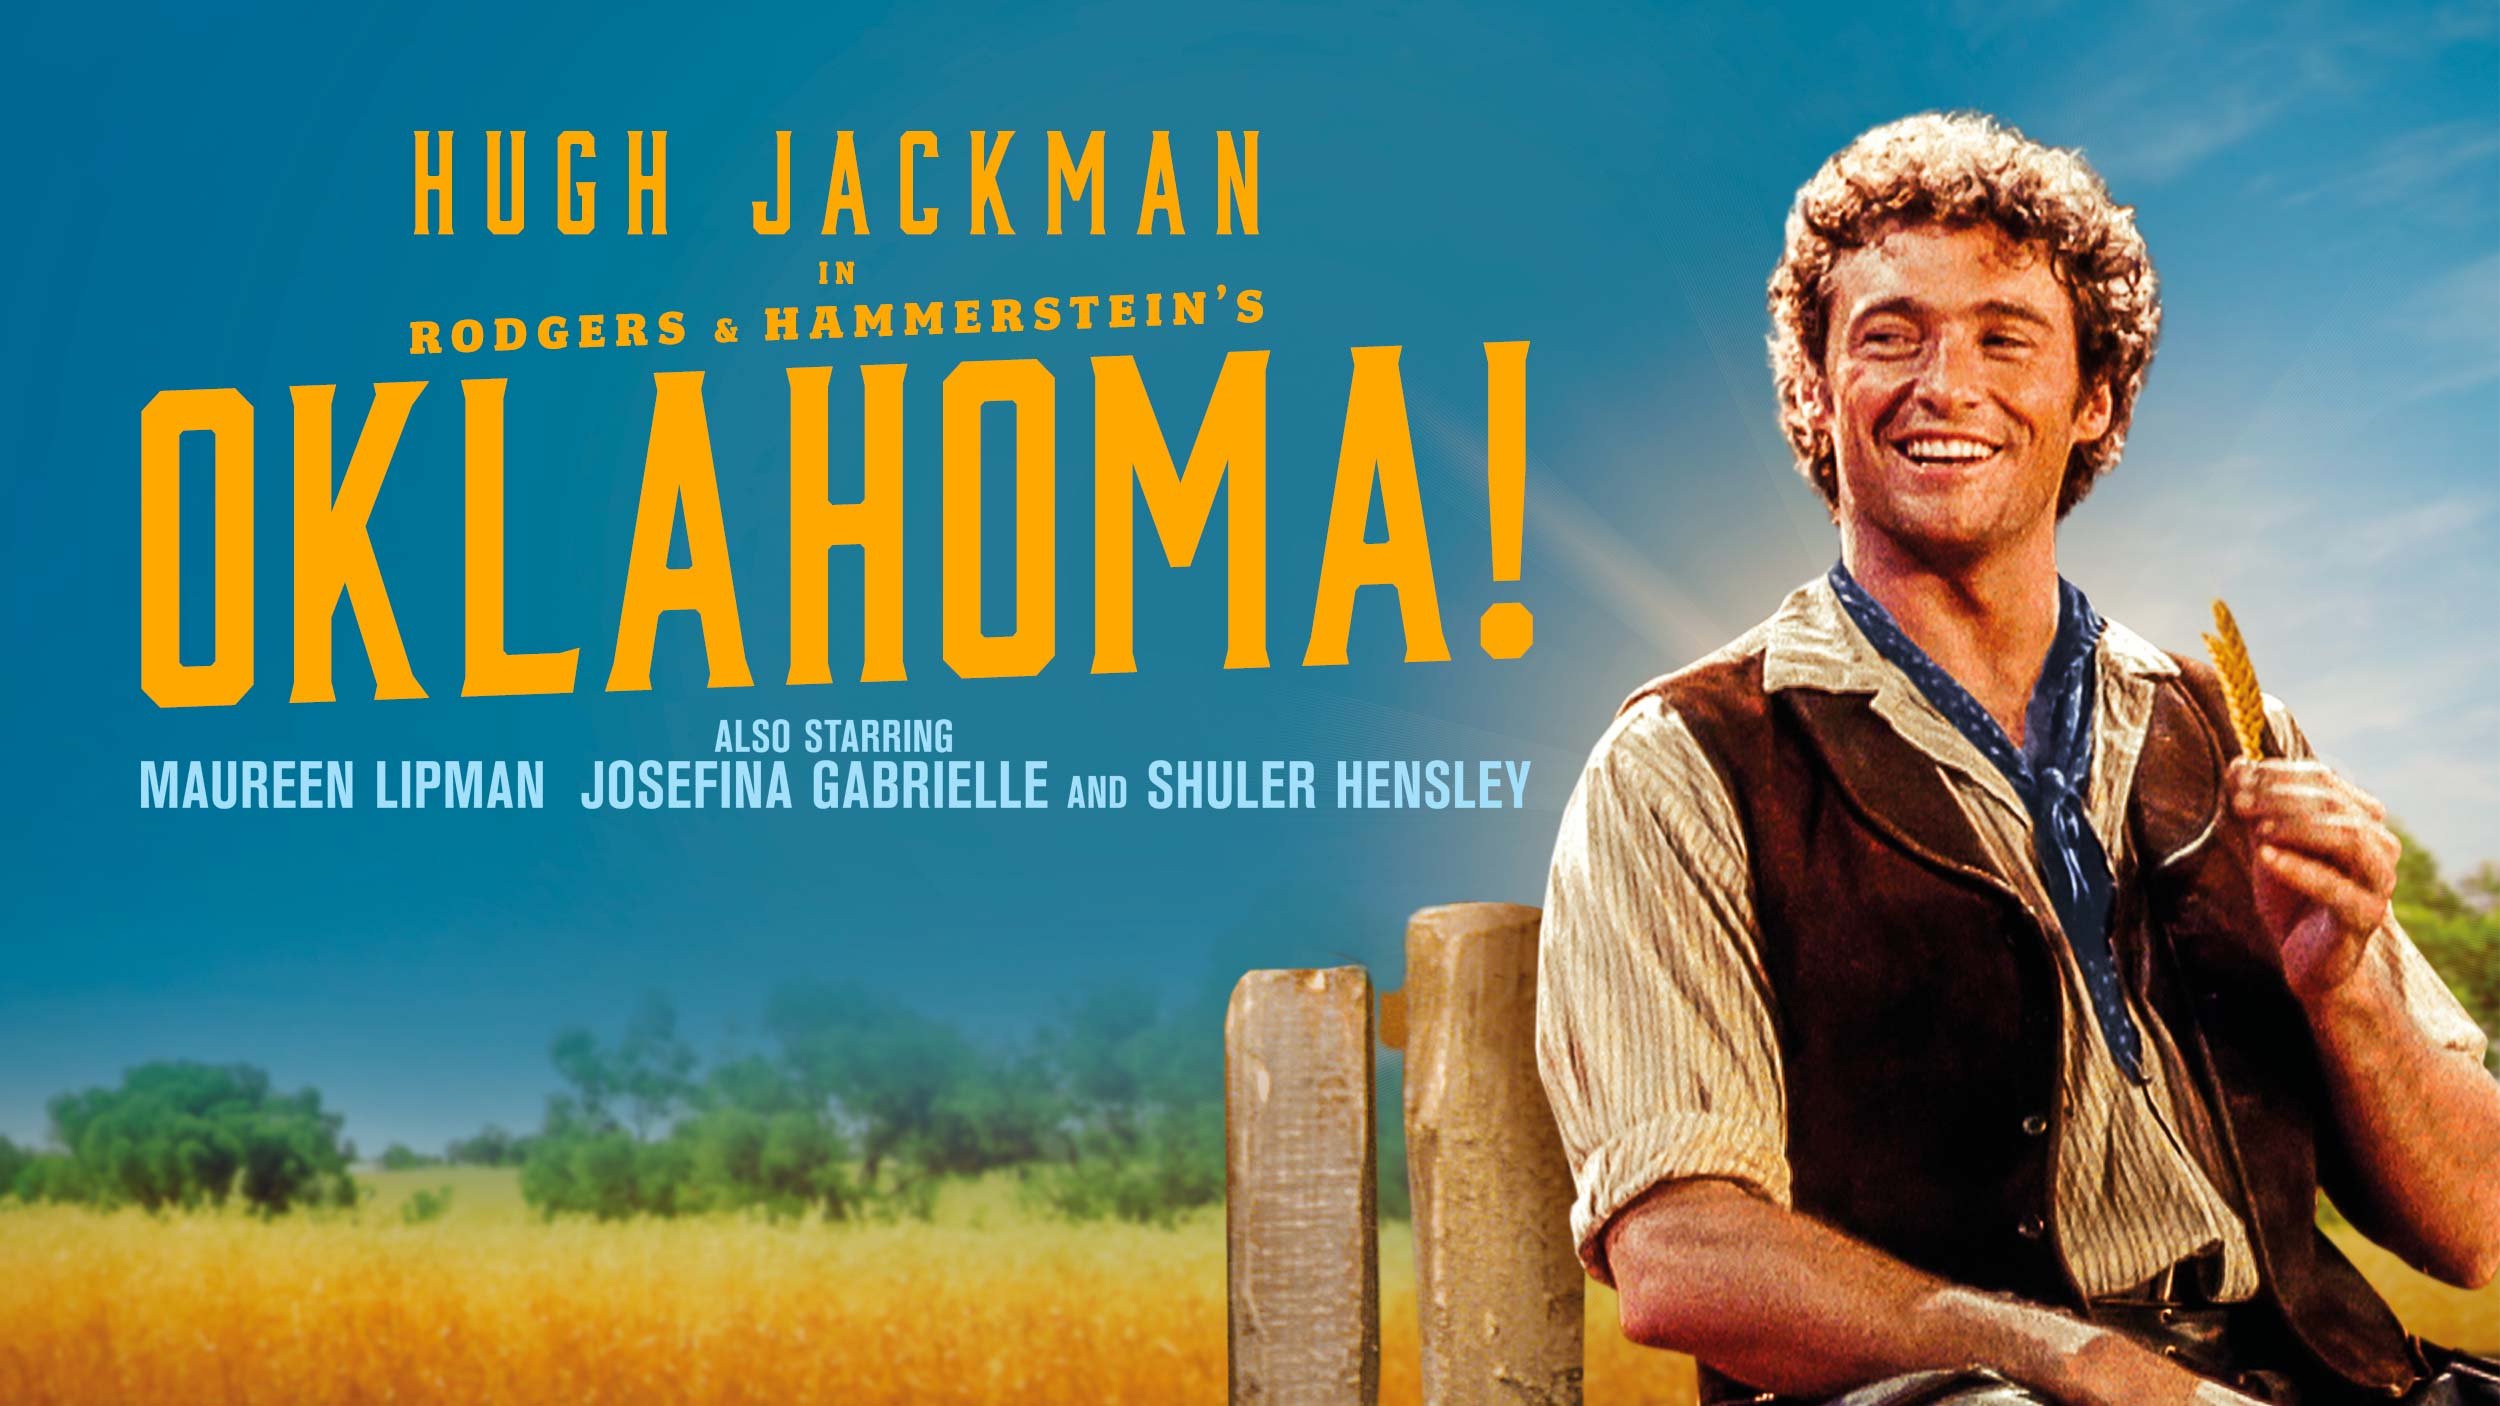 A promotional photo of Hugh Jackman for Oklahoma!